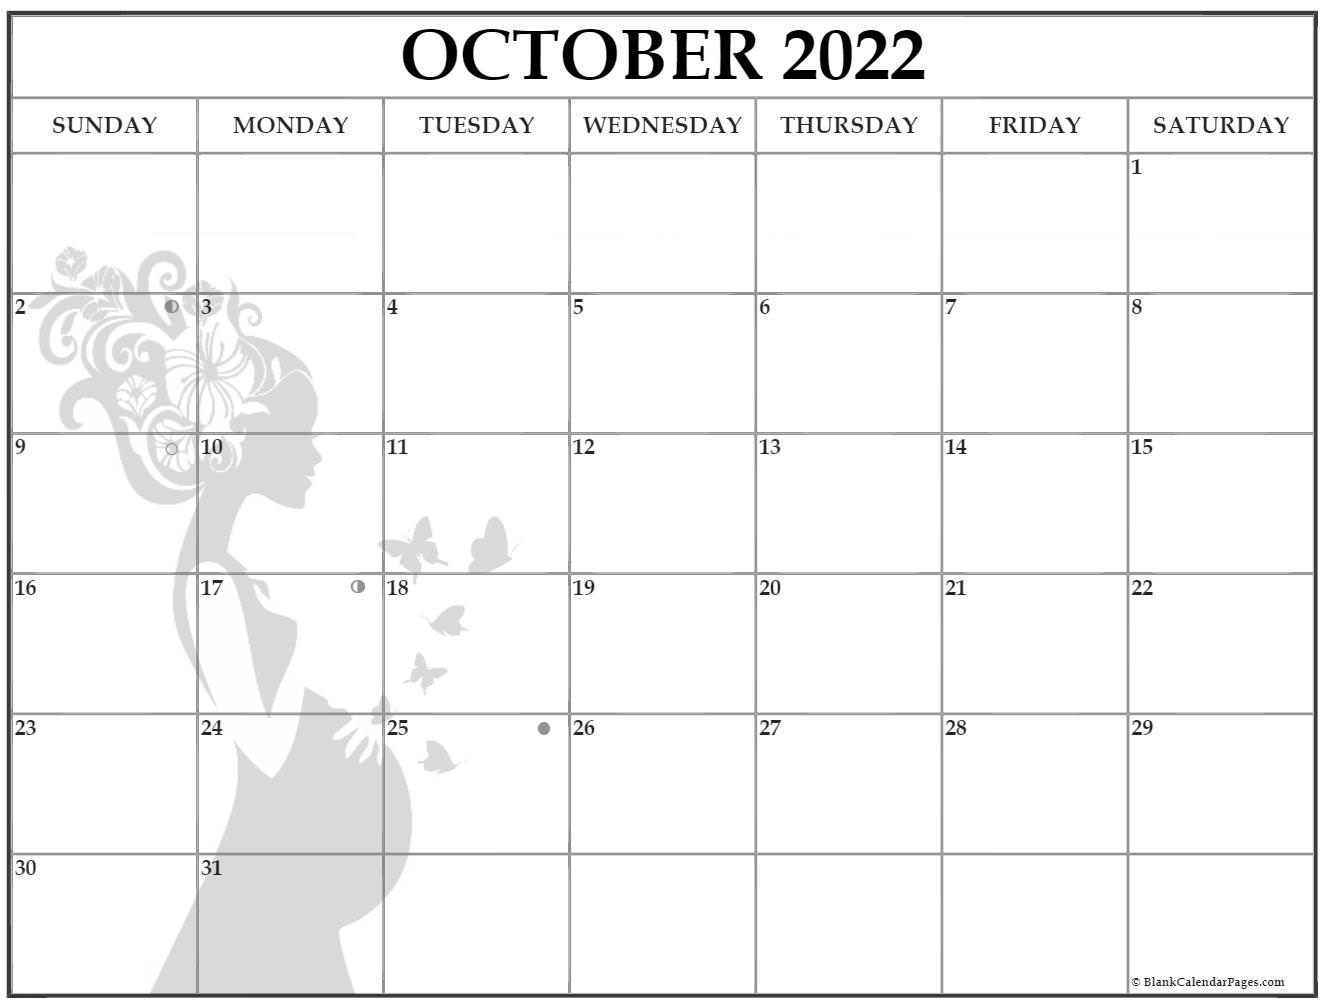 October 2022 Pregnancy Calendar | Fertility Calendar